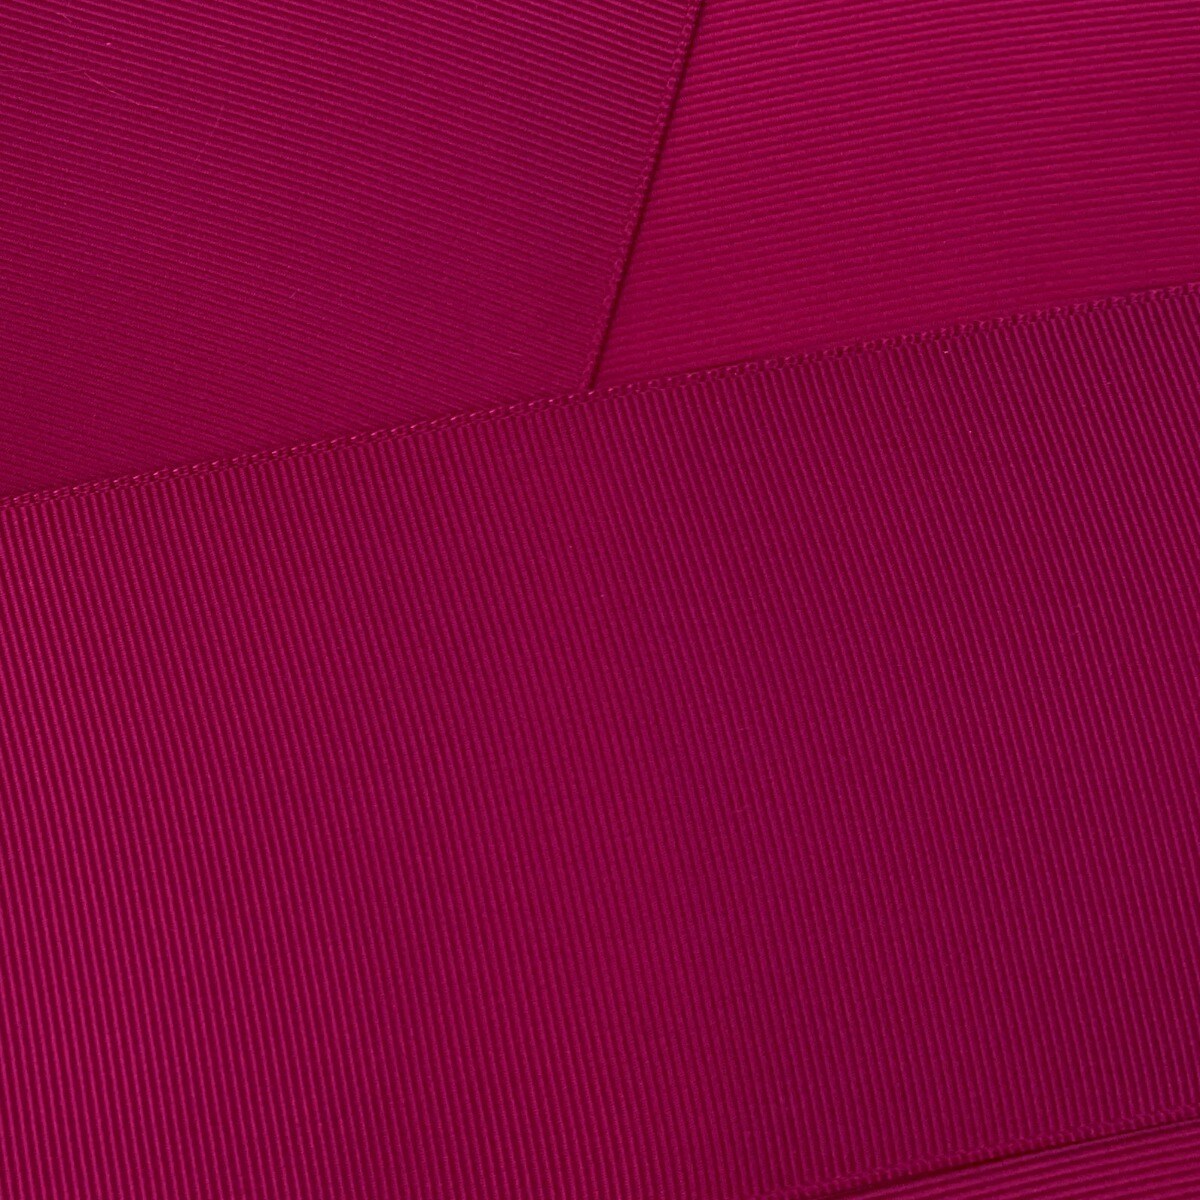 Hot Pink Texture 3/8 Inch x 100 Yards Grosgrain Ribbon